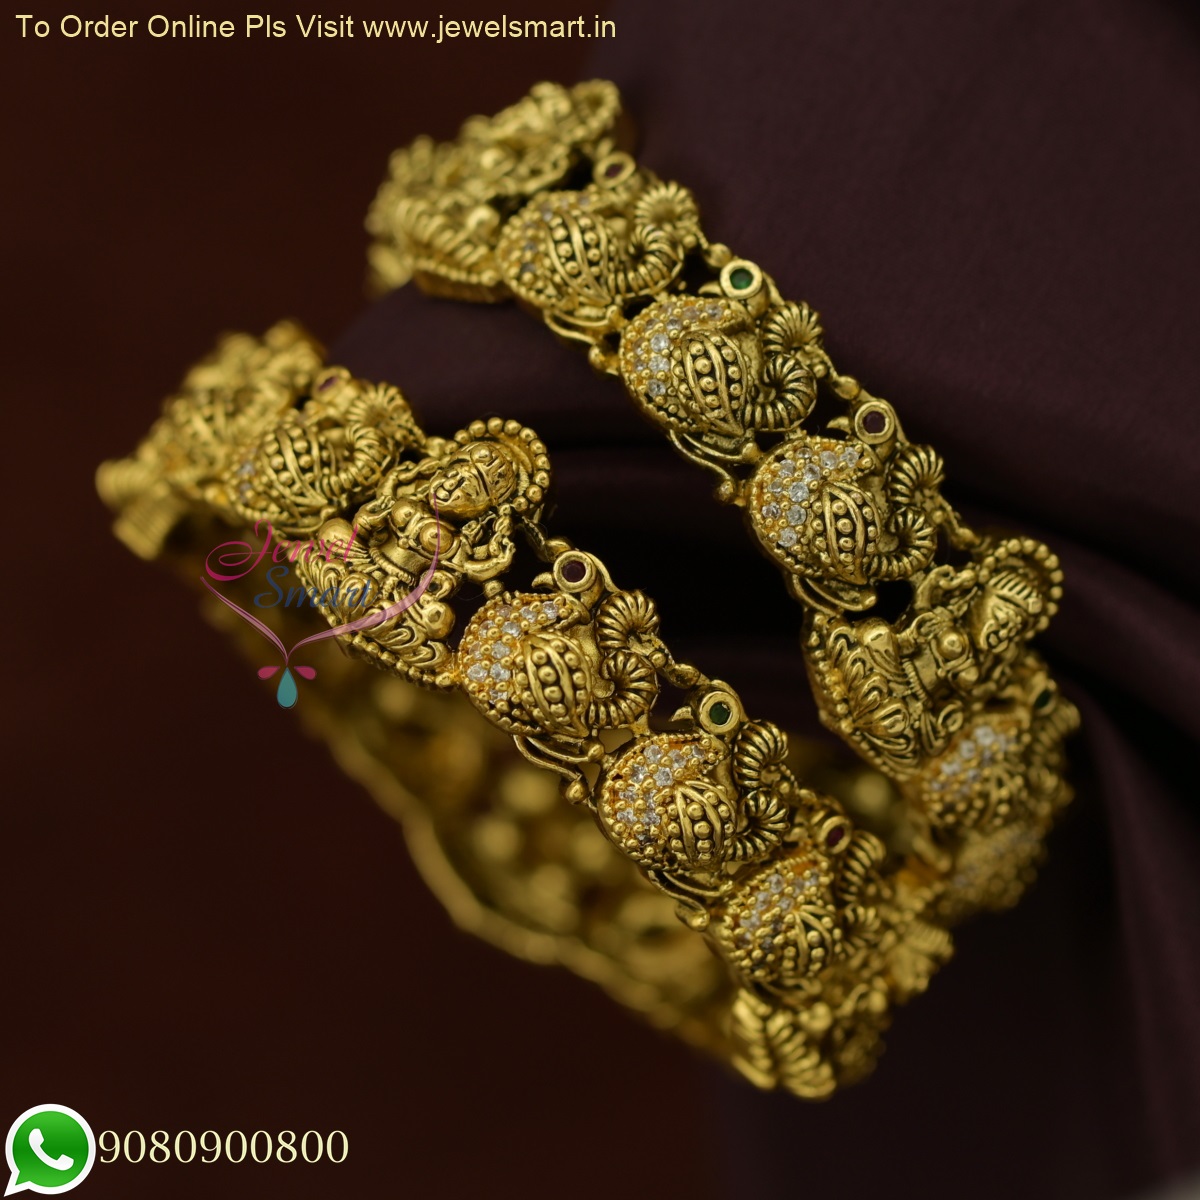 Buy quality Antique 22k Gold Bracelet in Rajkot